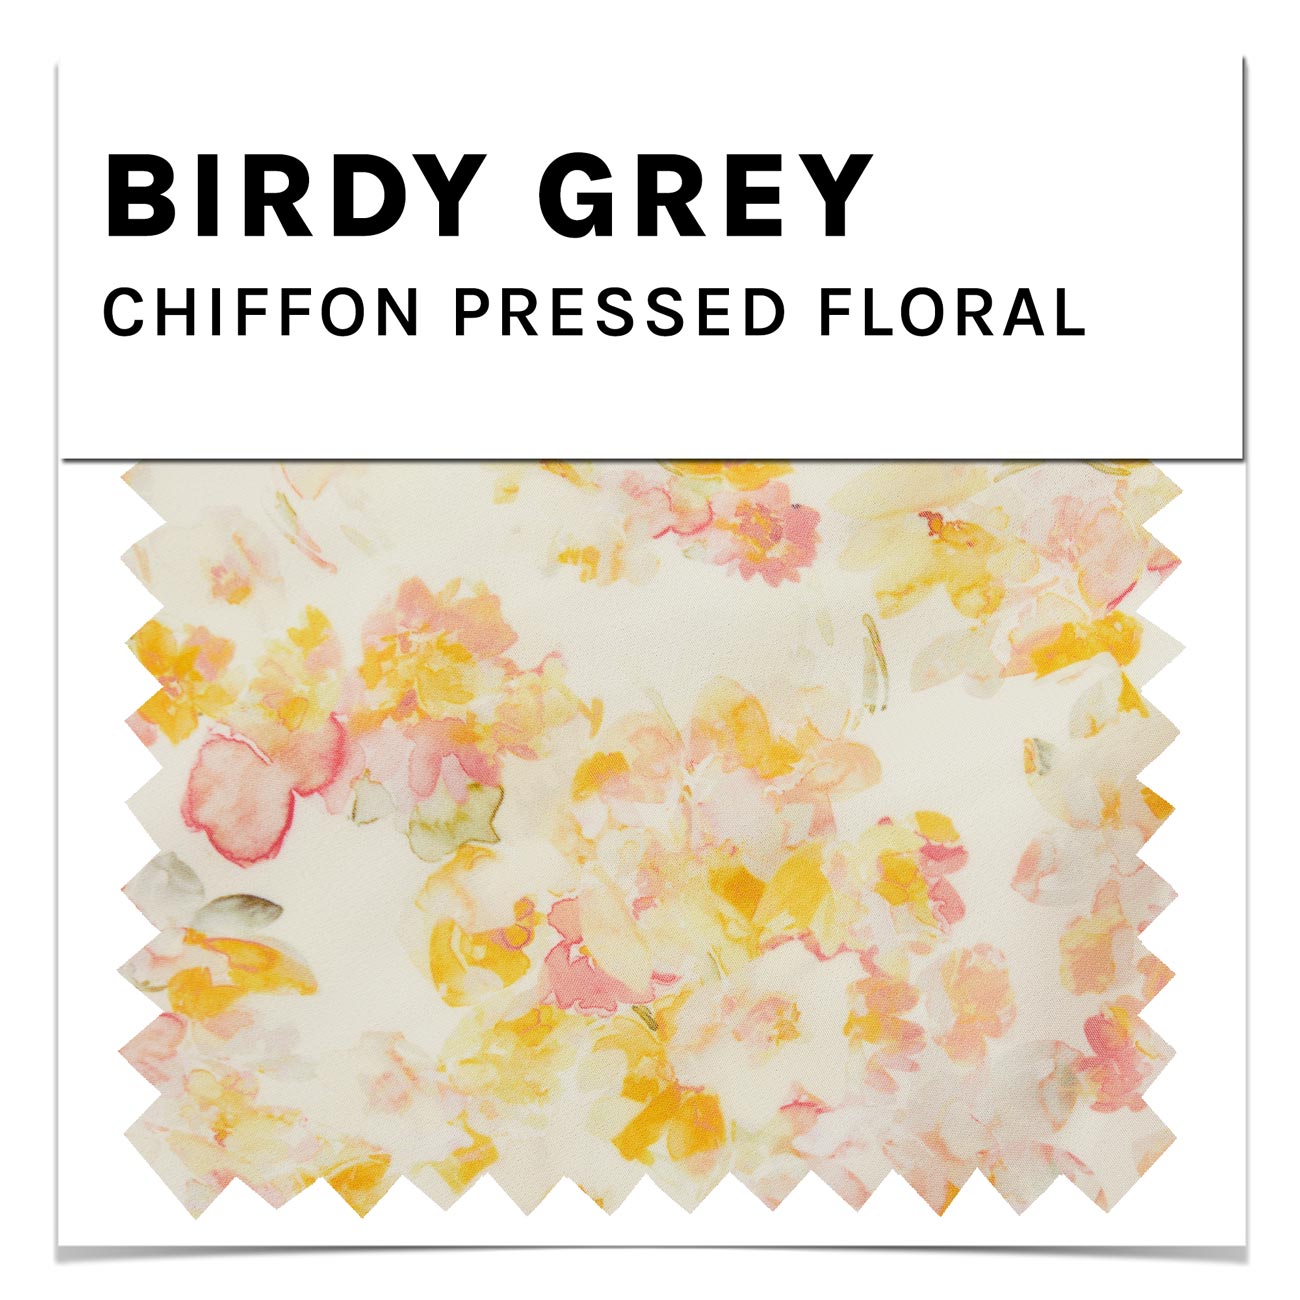 Pressed Floral Chiffon Swatch by Birdy Grey